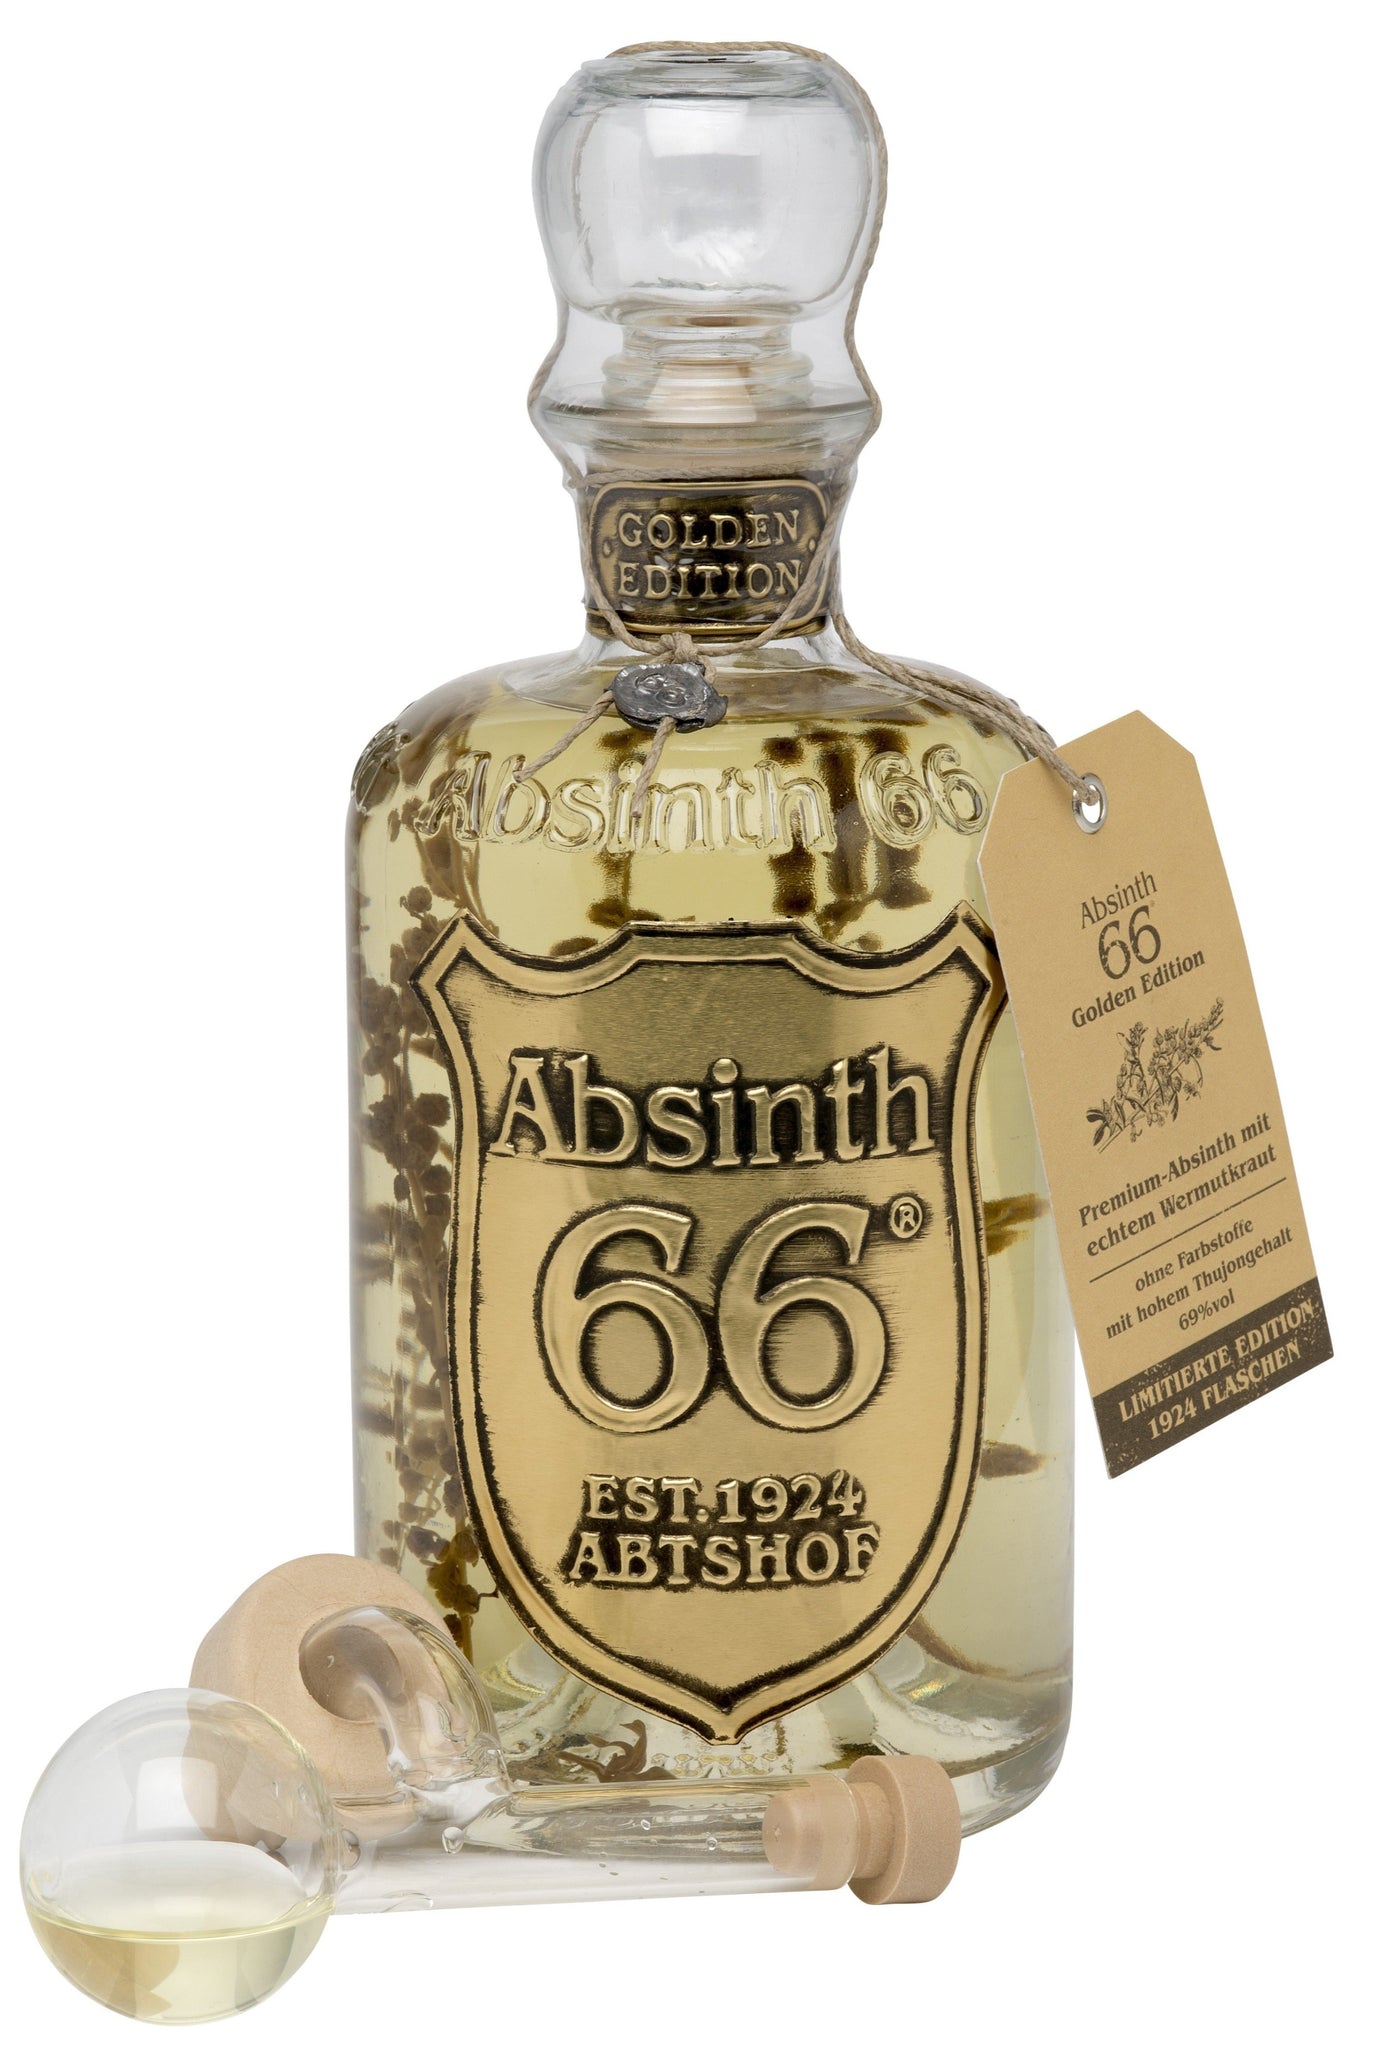 Absinth 66® "Golden Edition" - 0,5 L / 69 % vol. Bitterspirituose